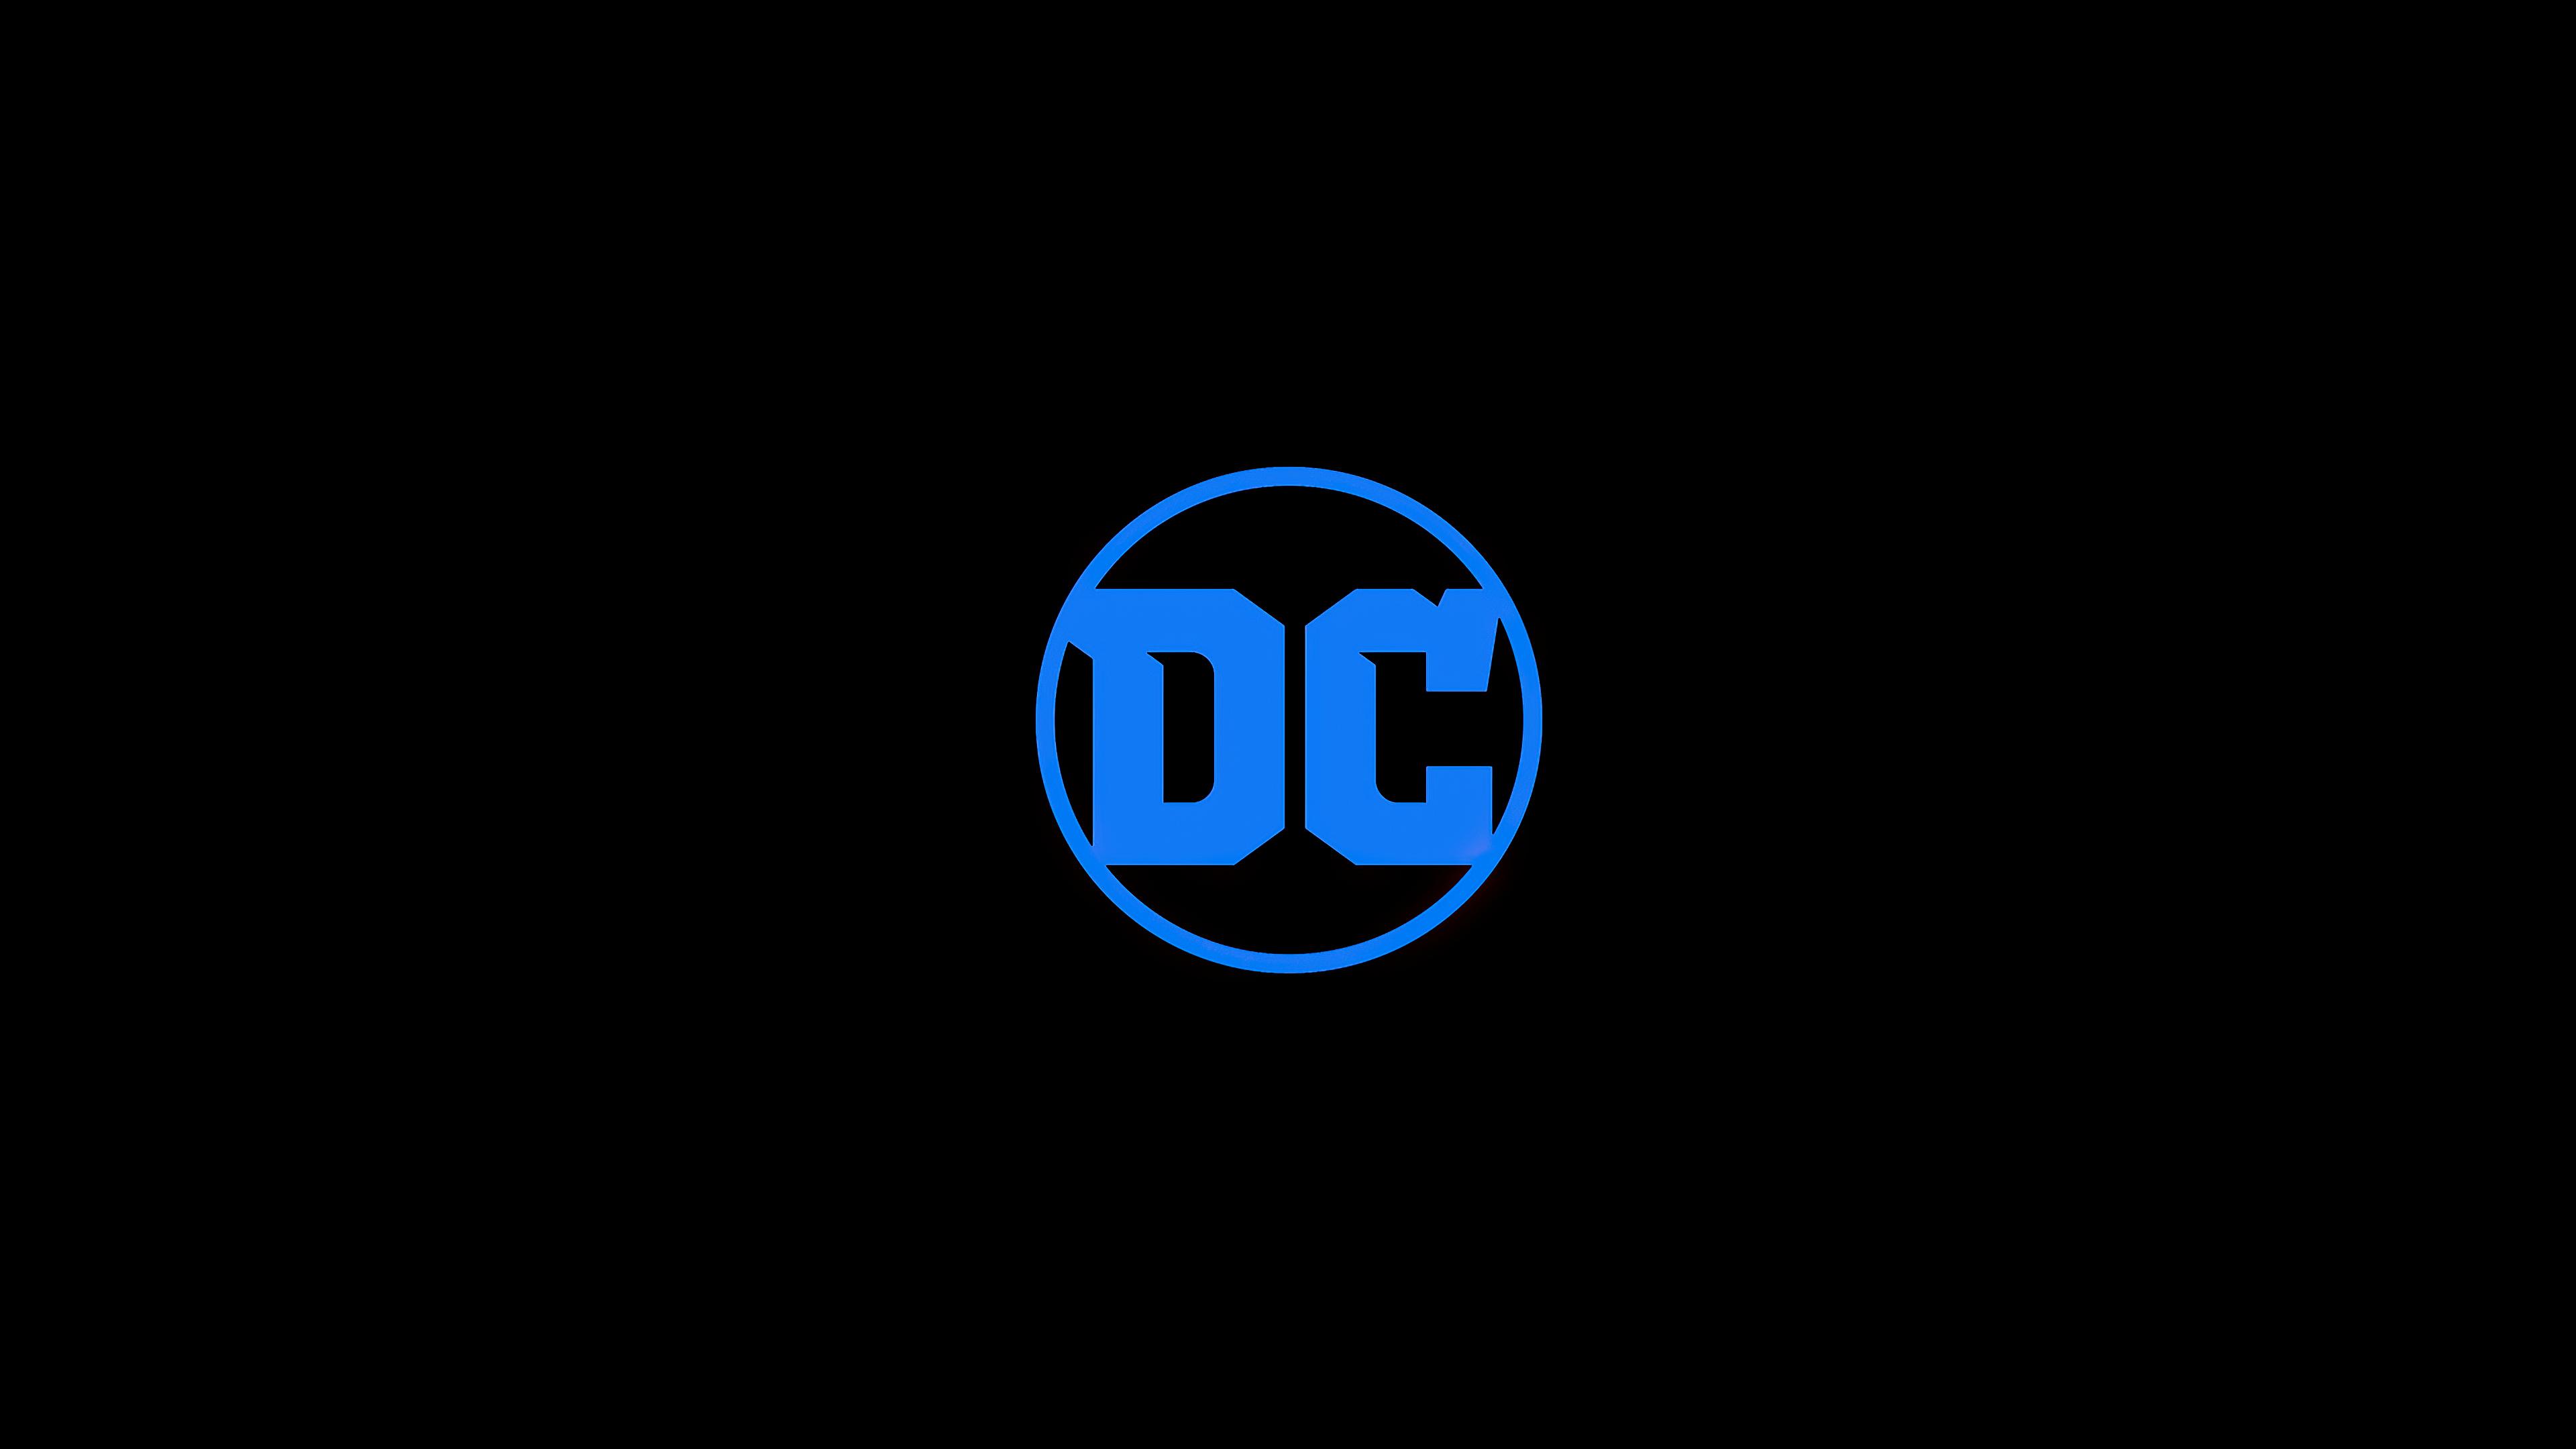 Dc Universe Logo Wallpapers Top Free Dc Universe Logo Backgrounds Wallpaperaccess